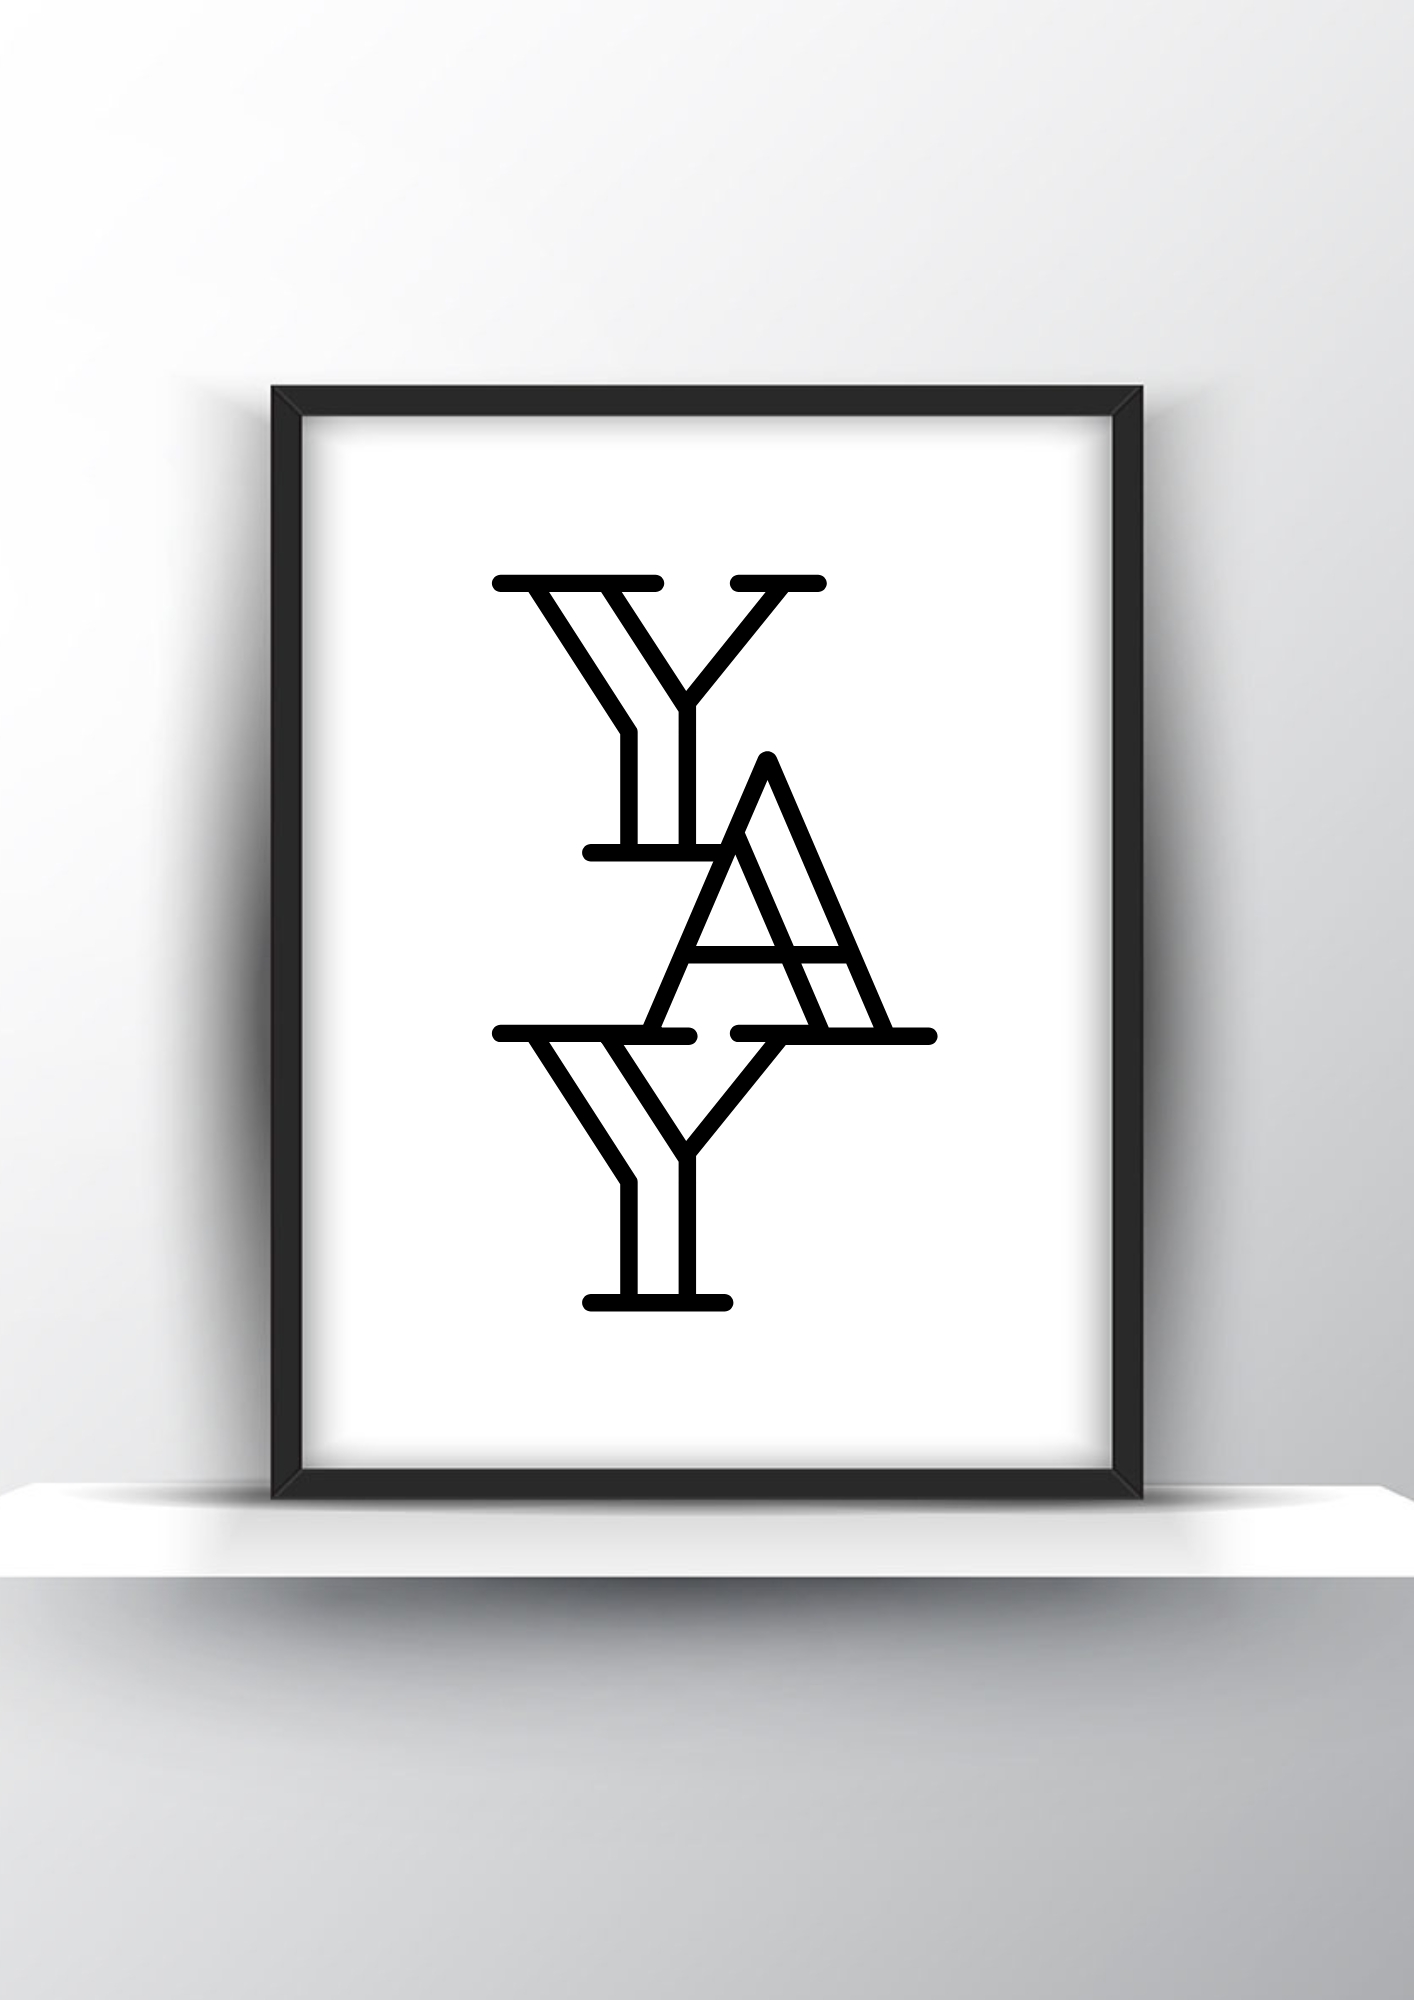 Yay Printable Wall Art - Typography Wall Art - Home Decor - Digital Download